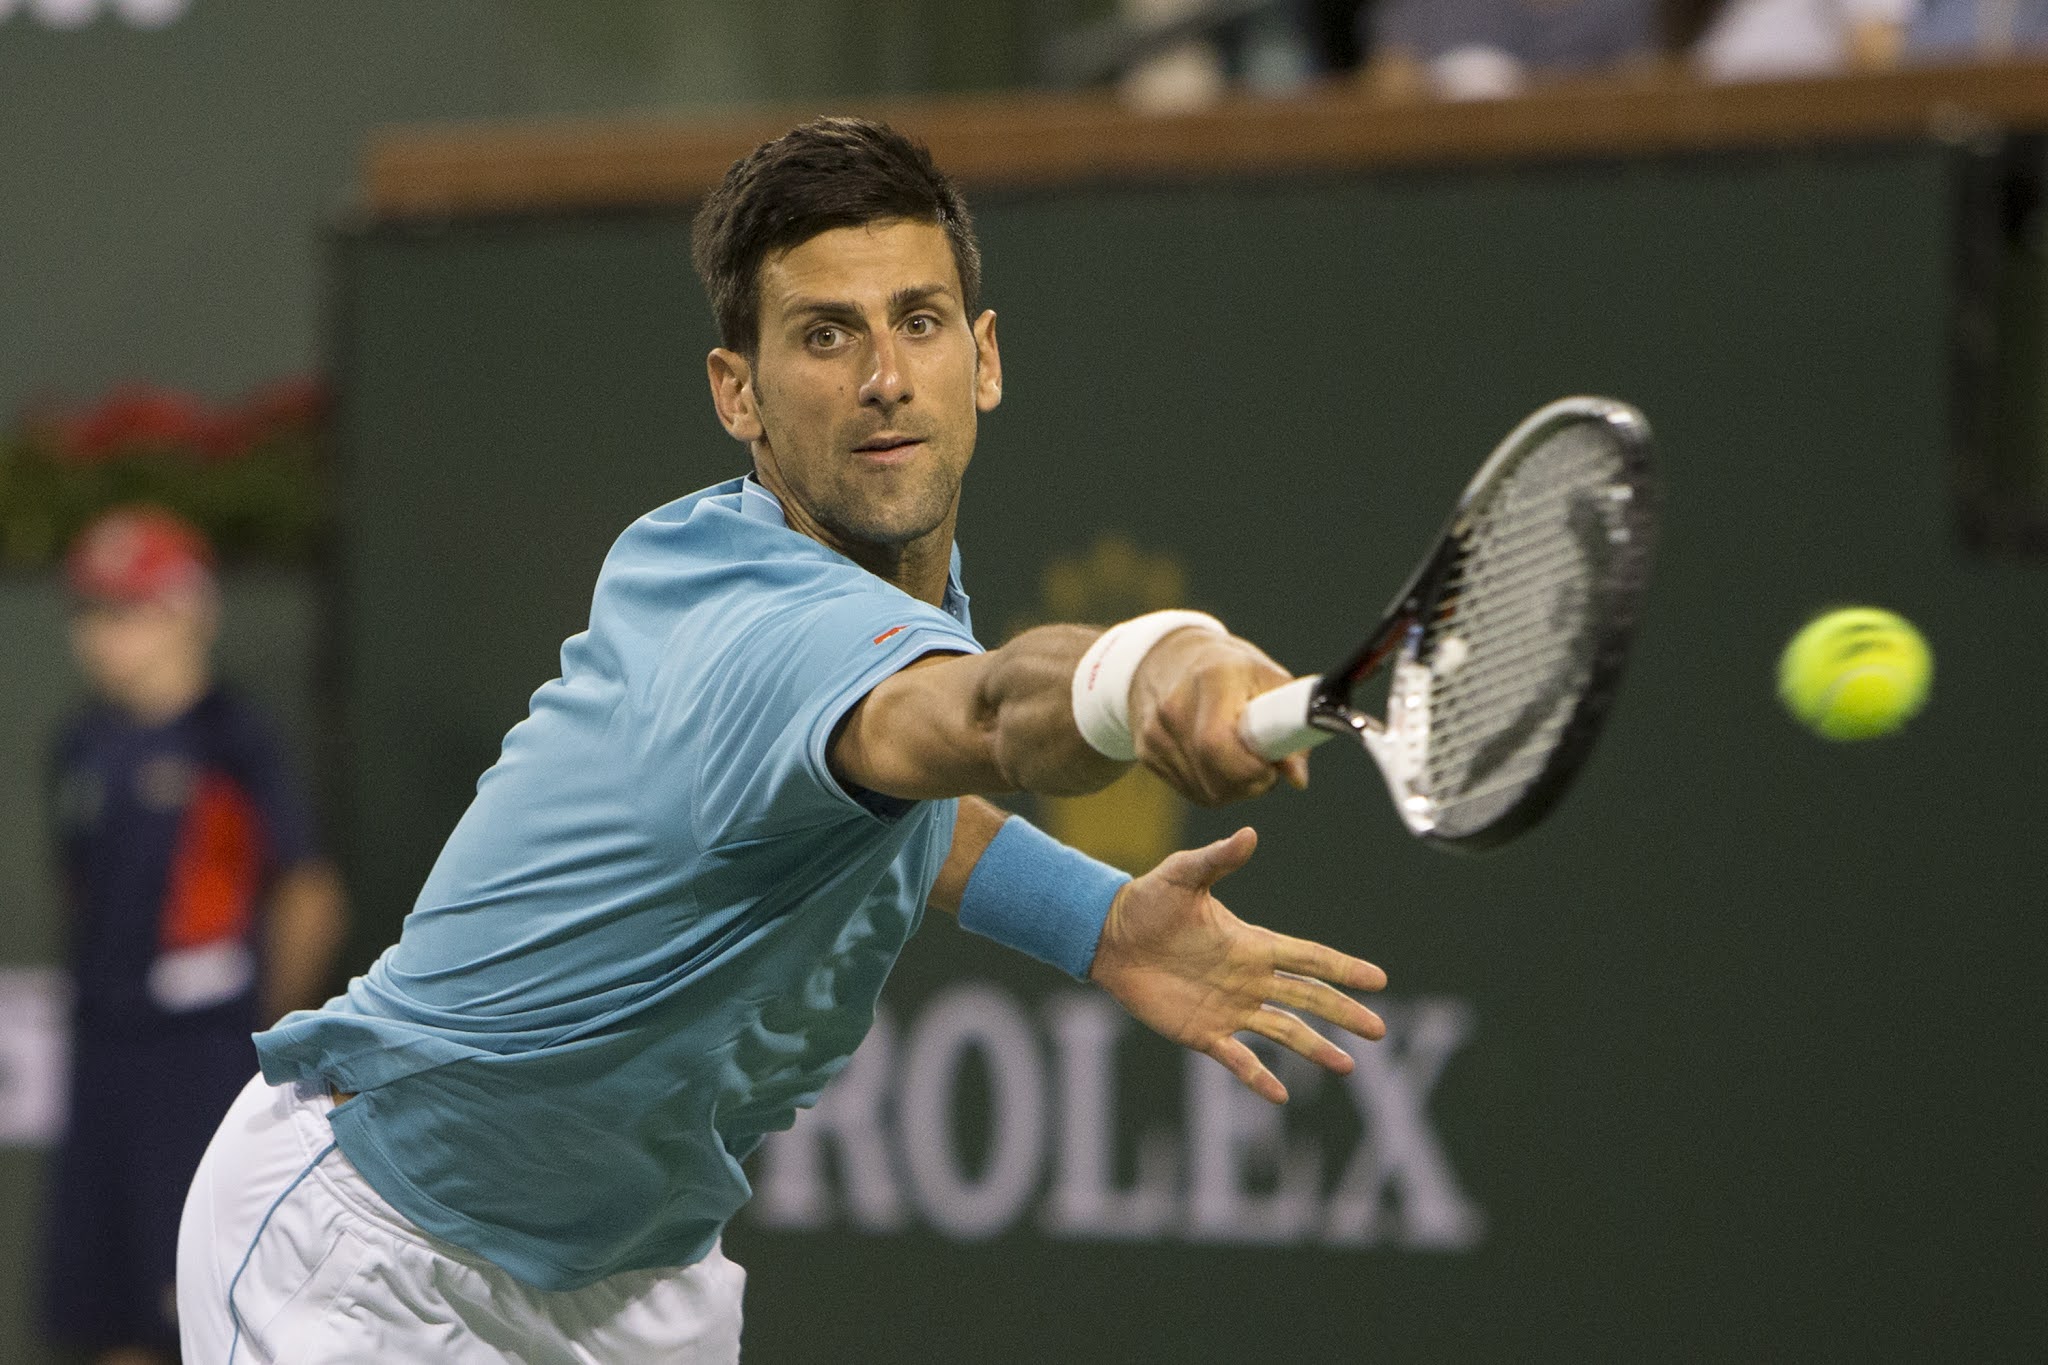 NorCal Tennis Czar Djokovic lifts Serbia in Davis Cup; Konta retires at 30